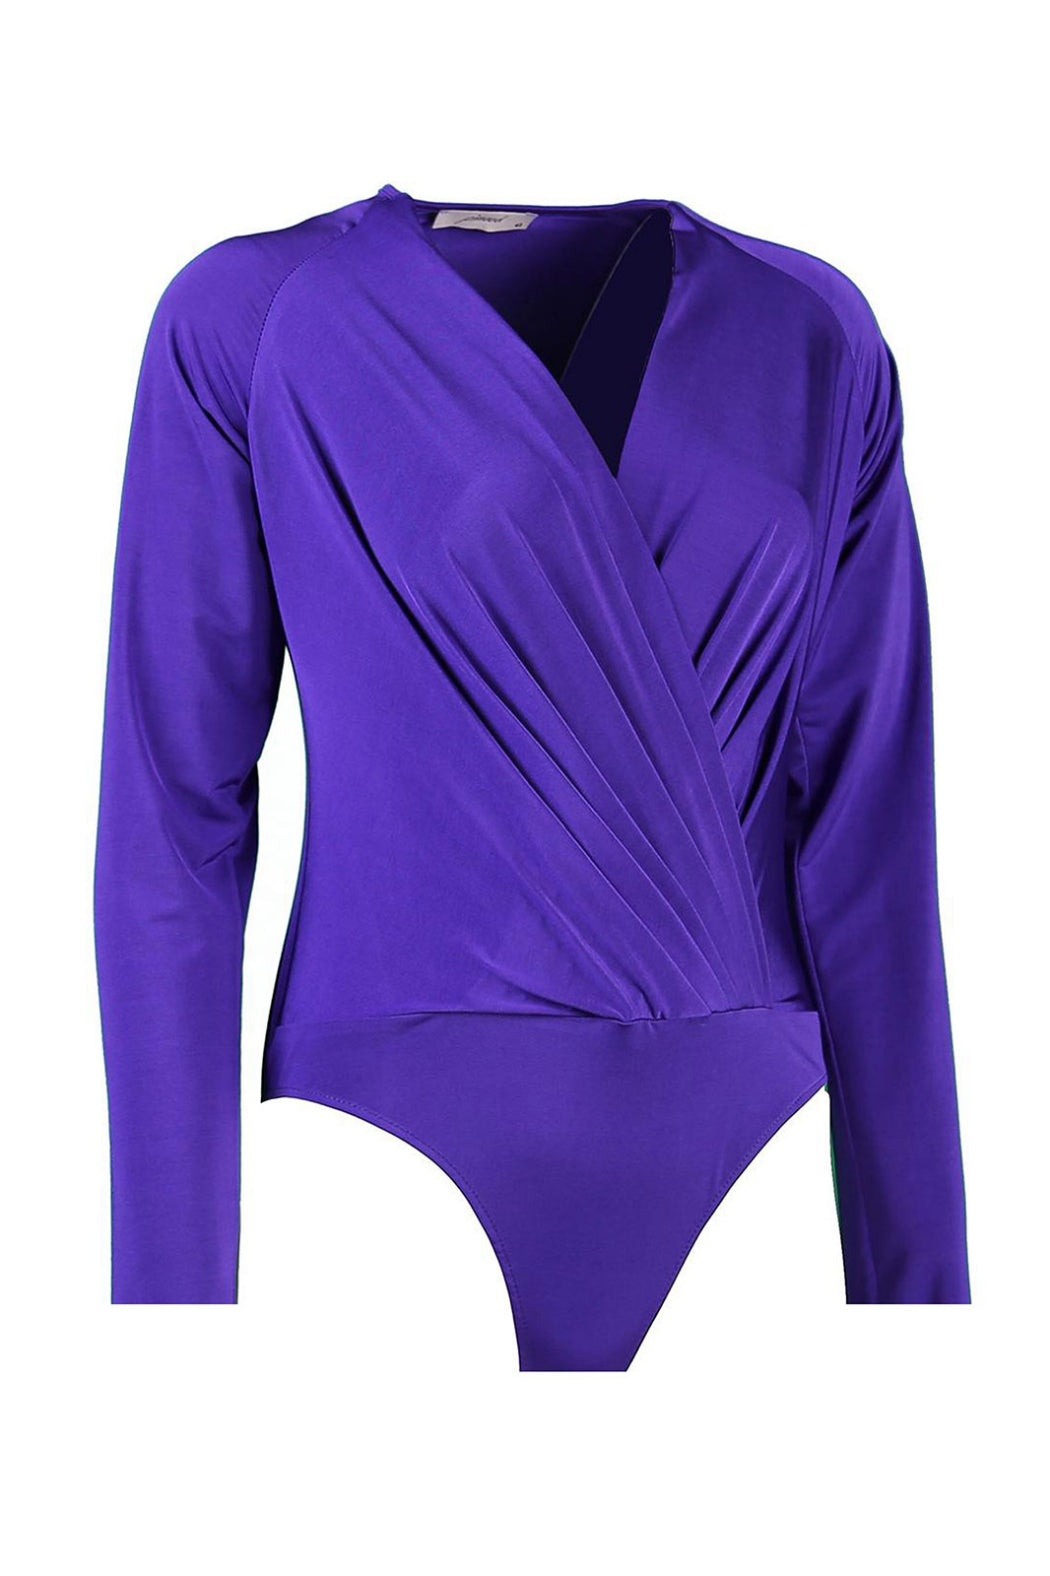 Carol Purple Double Breasted Neck Long Sleeve Bodysuit